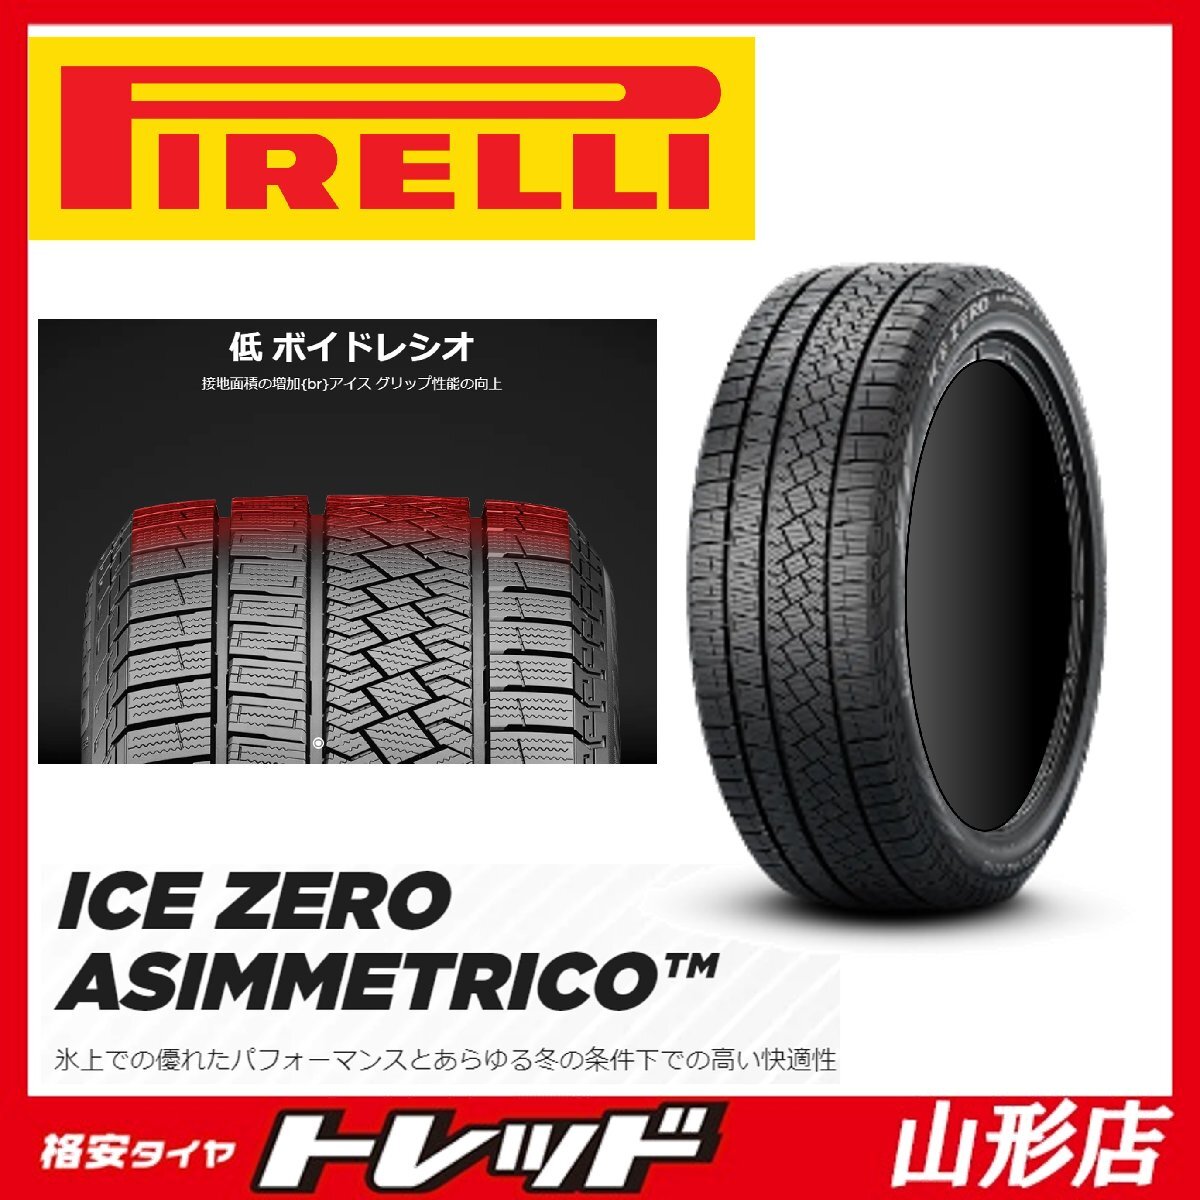 Магазин yamagata Новый набор без стадаров из 4 Pirelli Ice Zero Asymmetrico 225/50R18 99H XL 2023 Corolla Cross Odyssey и т. Д.